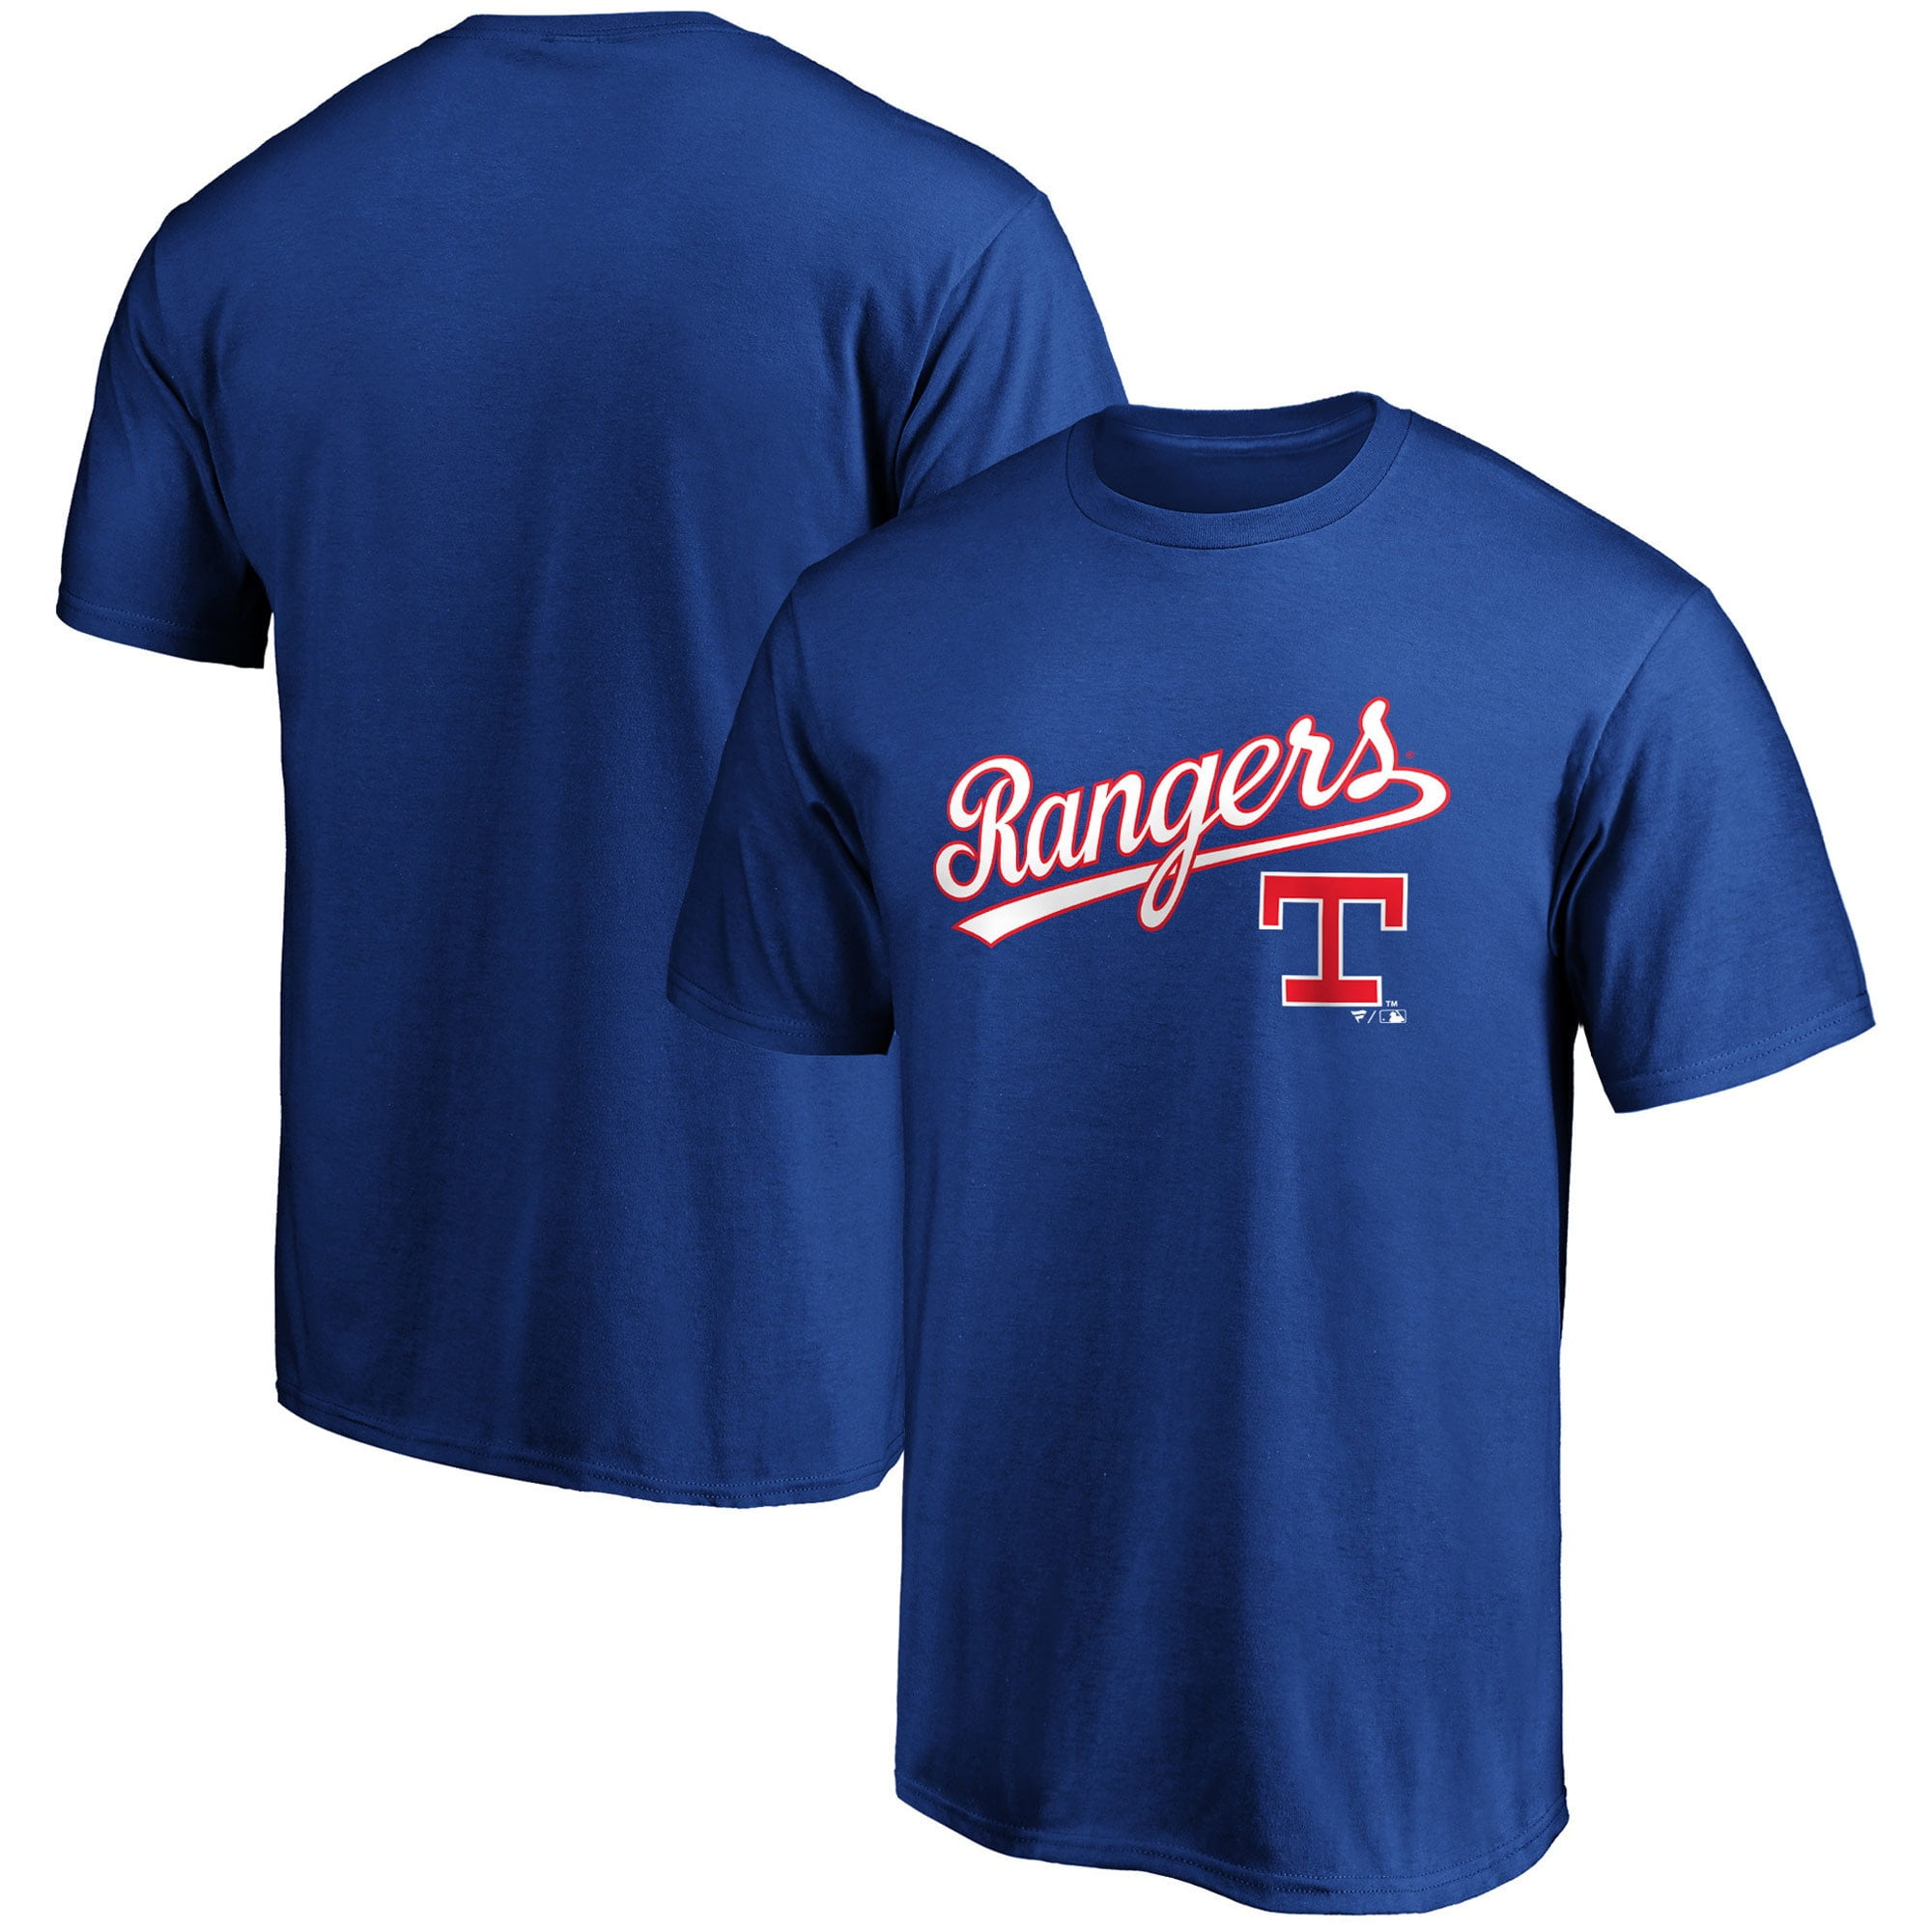 Texas Rangers Fanatics Branded 